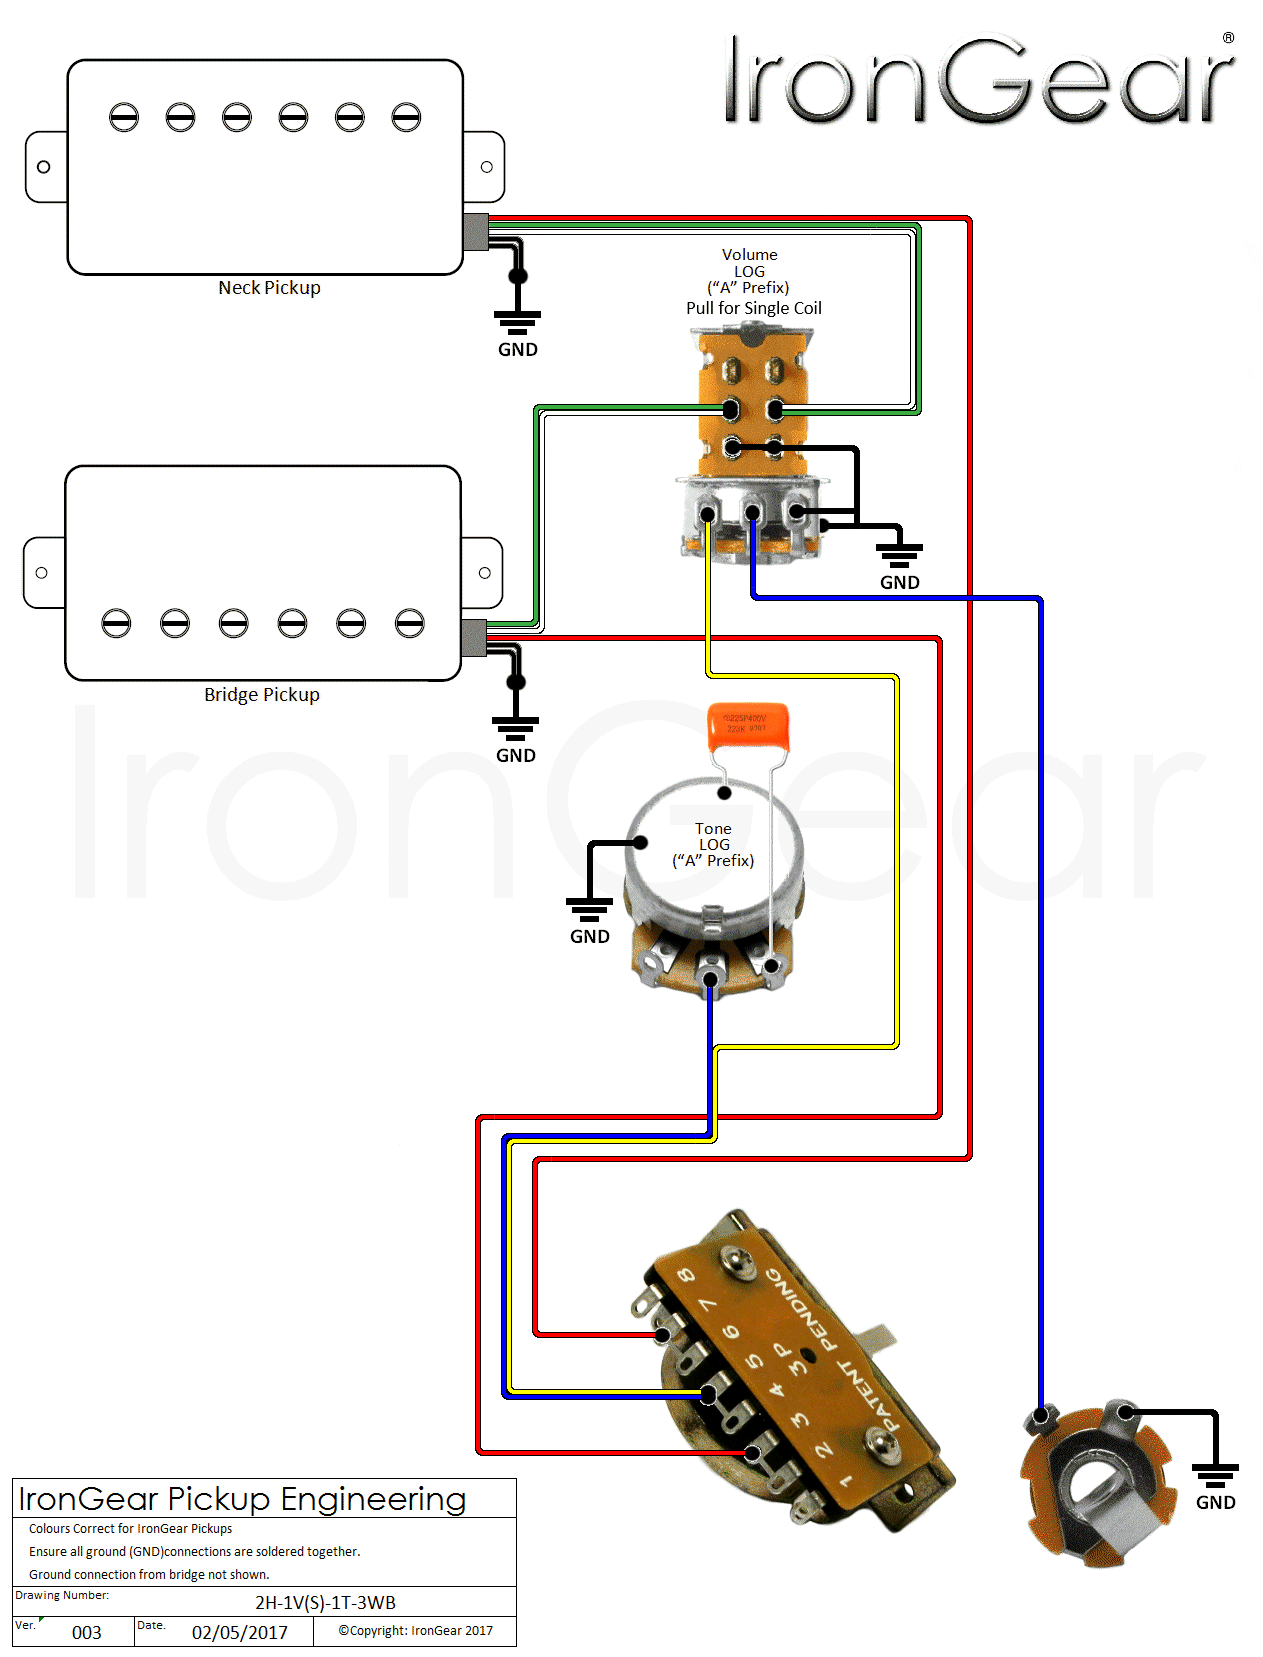 p90 and humbucker wiring diagram